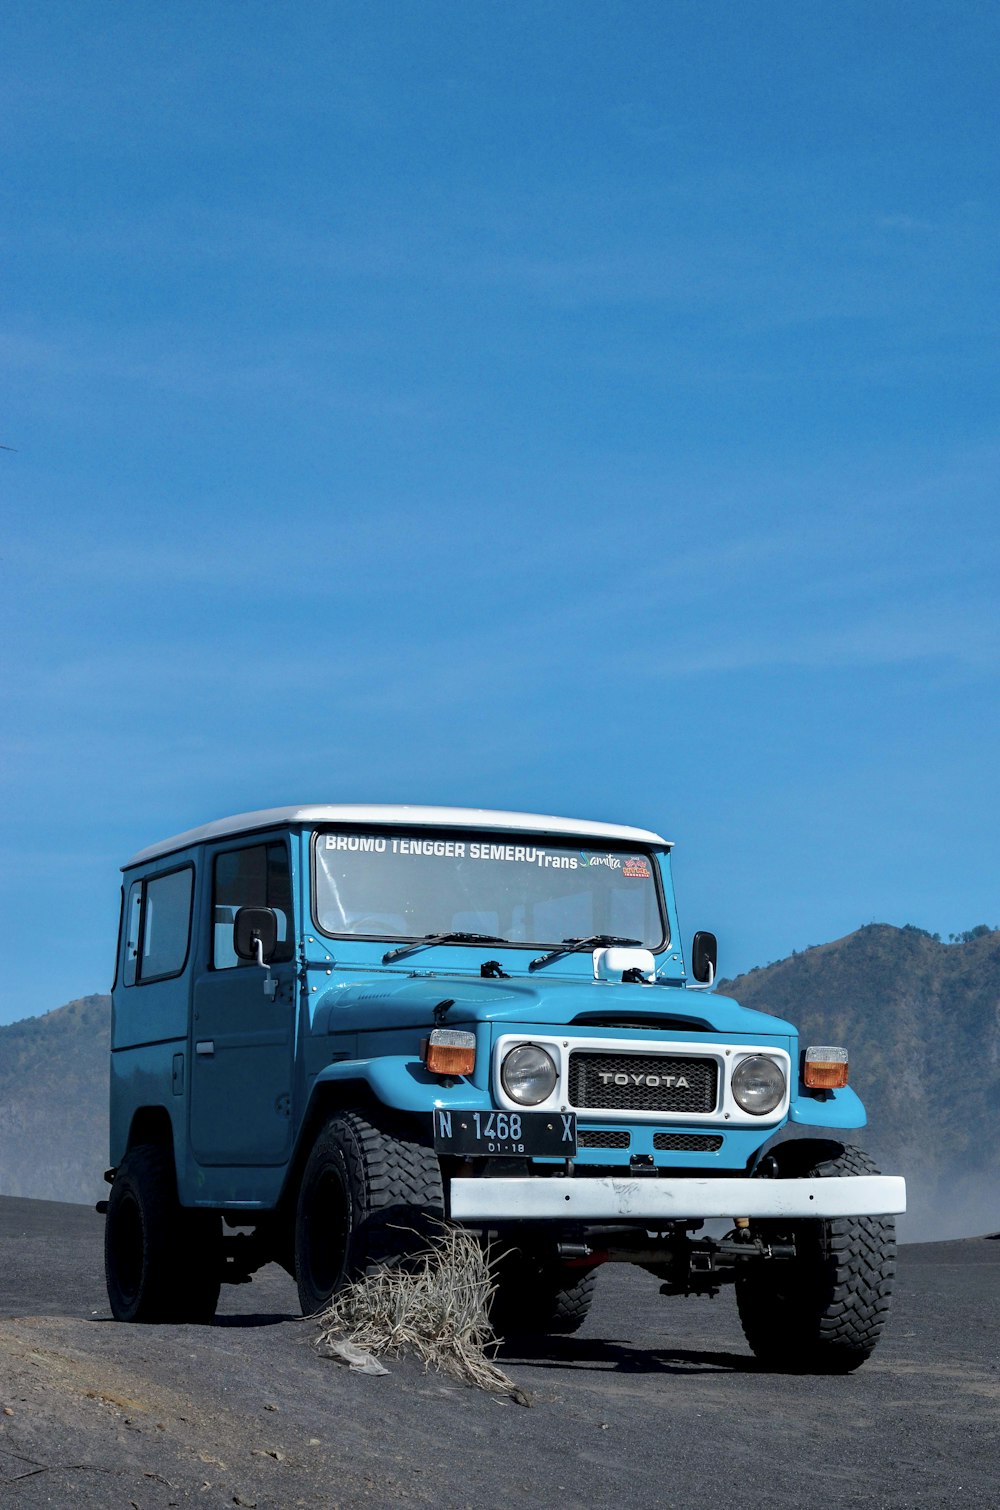 blue and white jeep wrangler on road during daytime photo – Free Bromo  Image on Unsplash